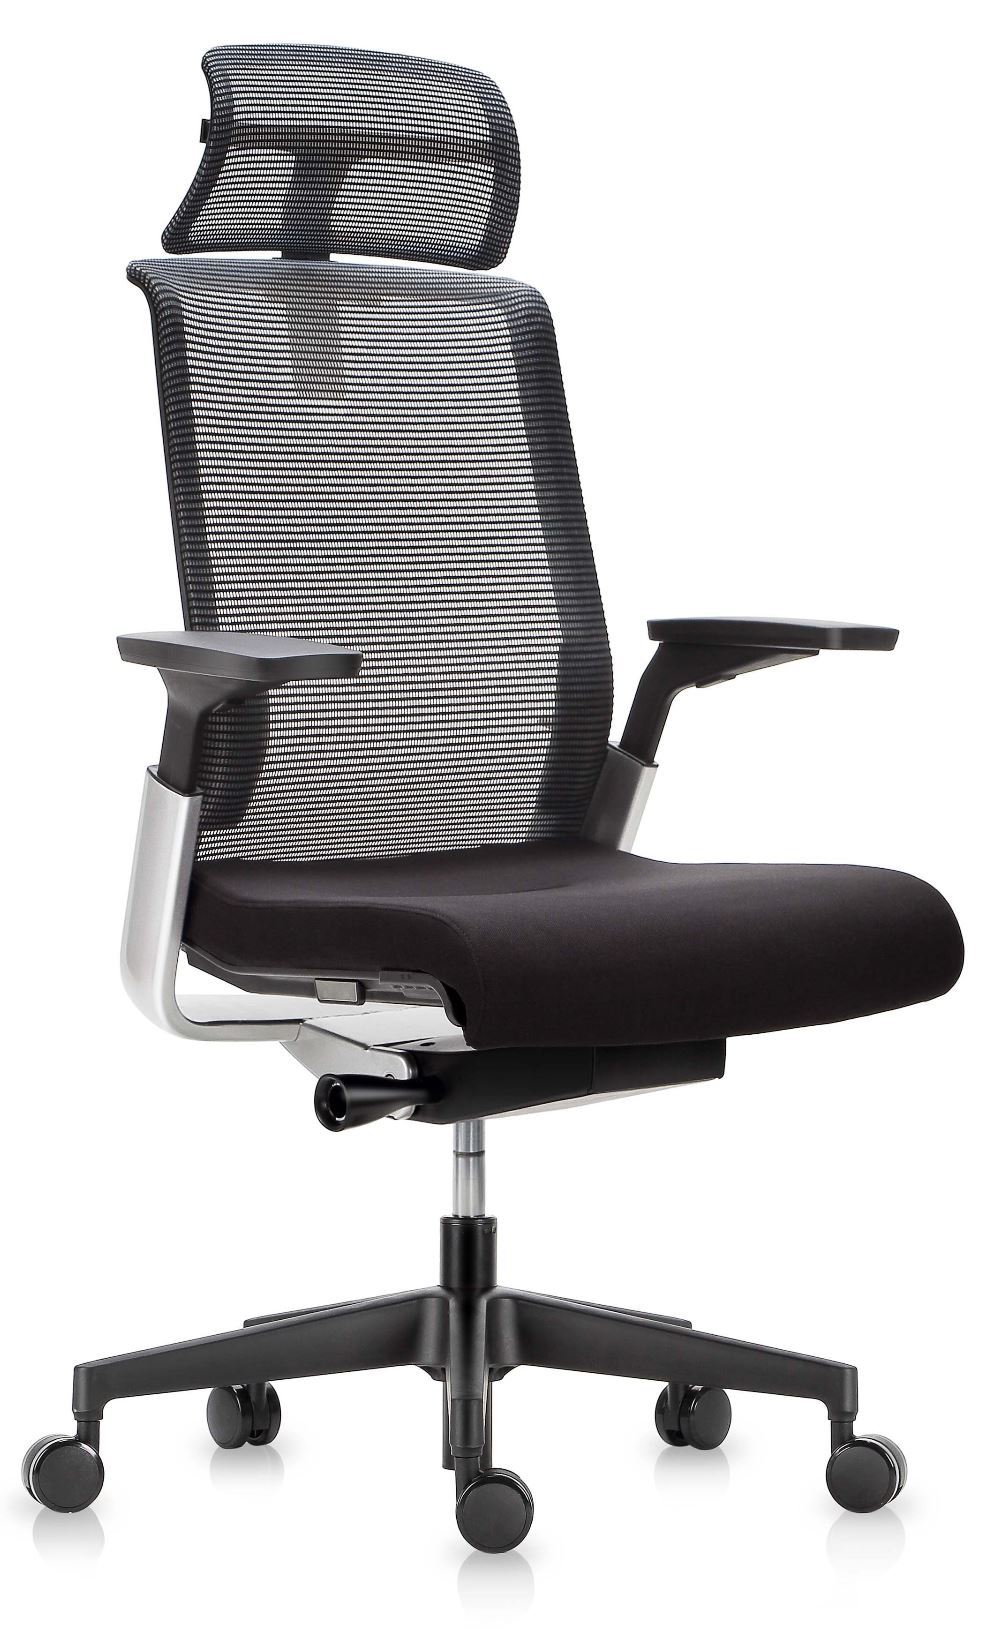 Match chair with headrest